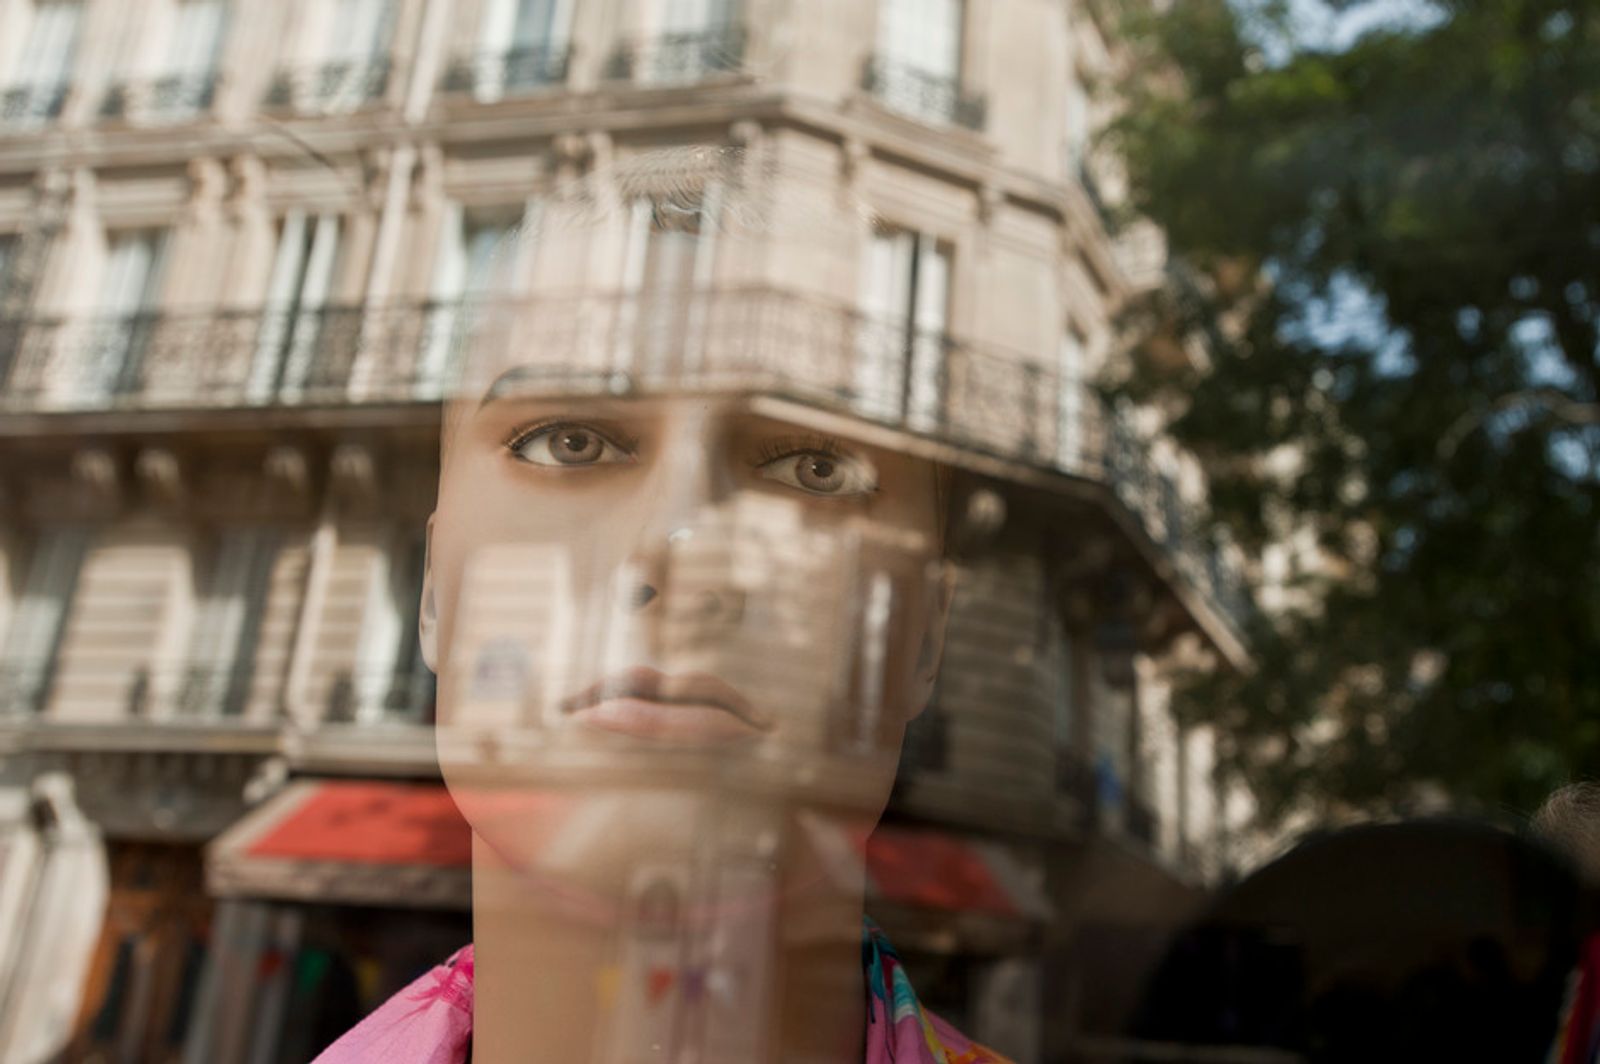 © Steven Edson - Store mannequins in window in Paris France